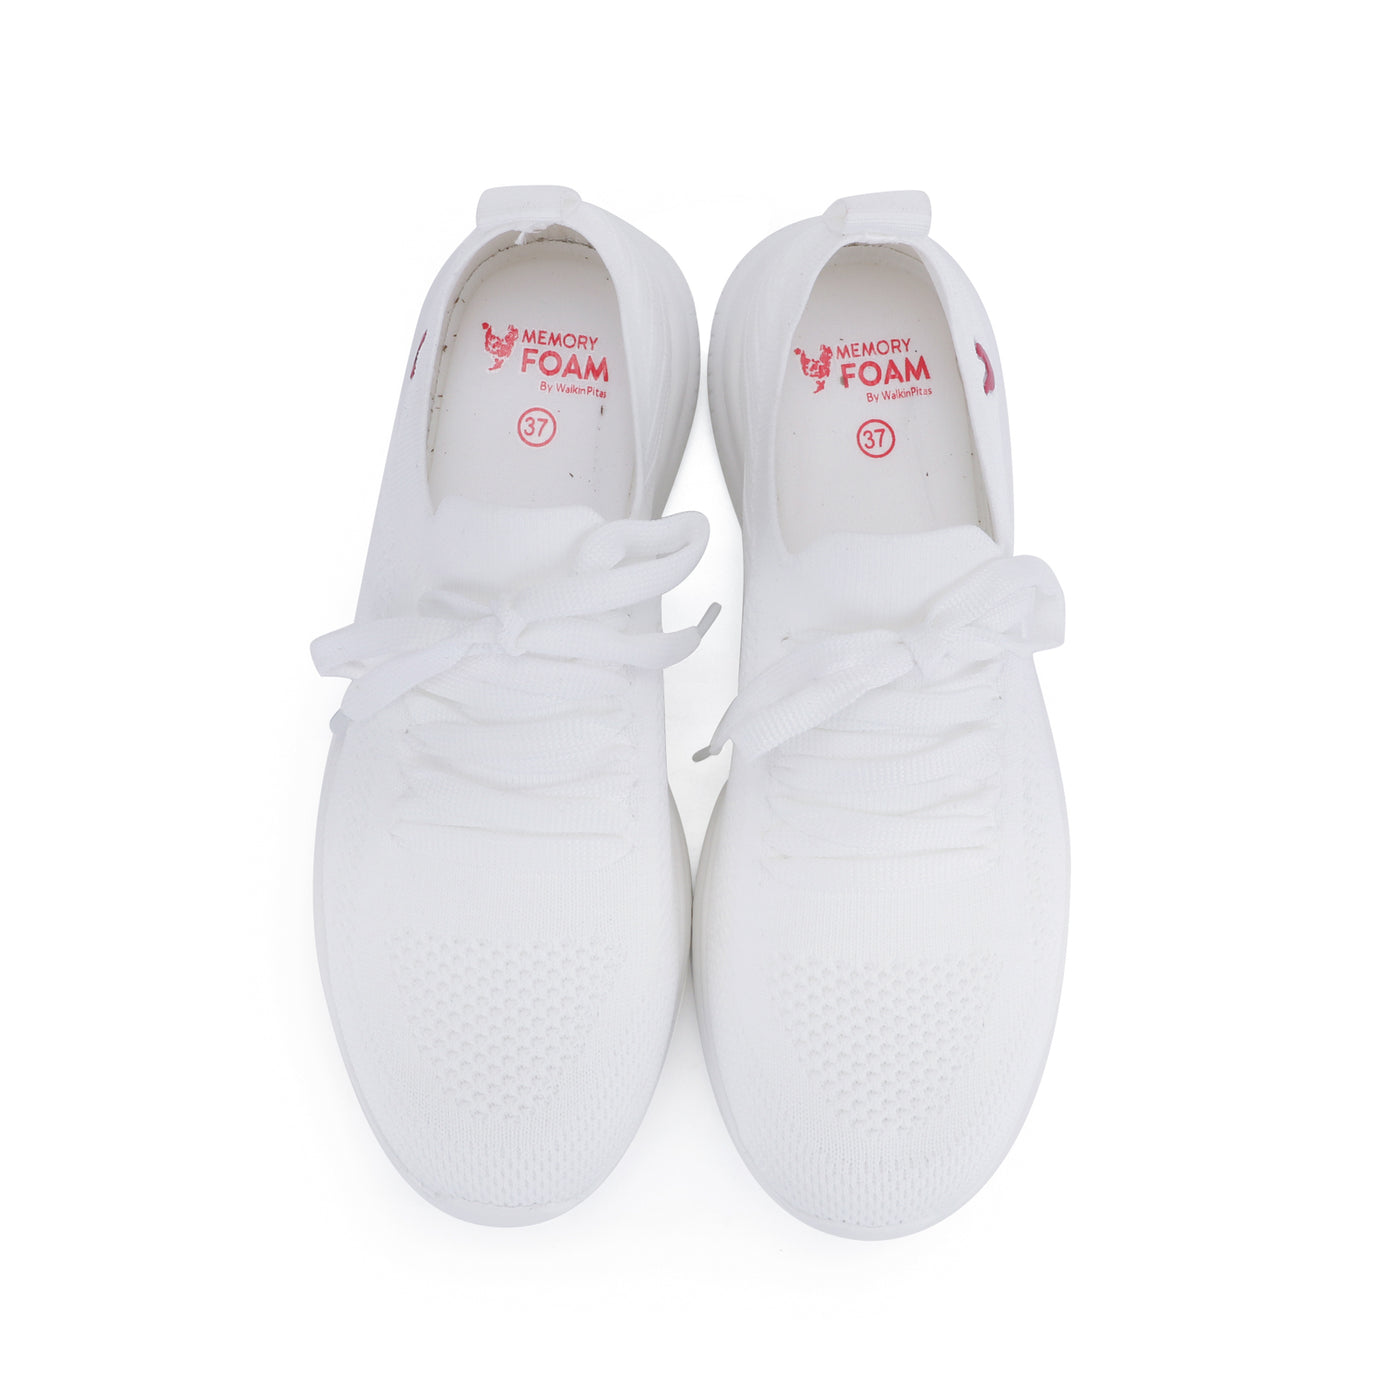 Pitas White Memory Foam Sneakers